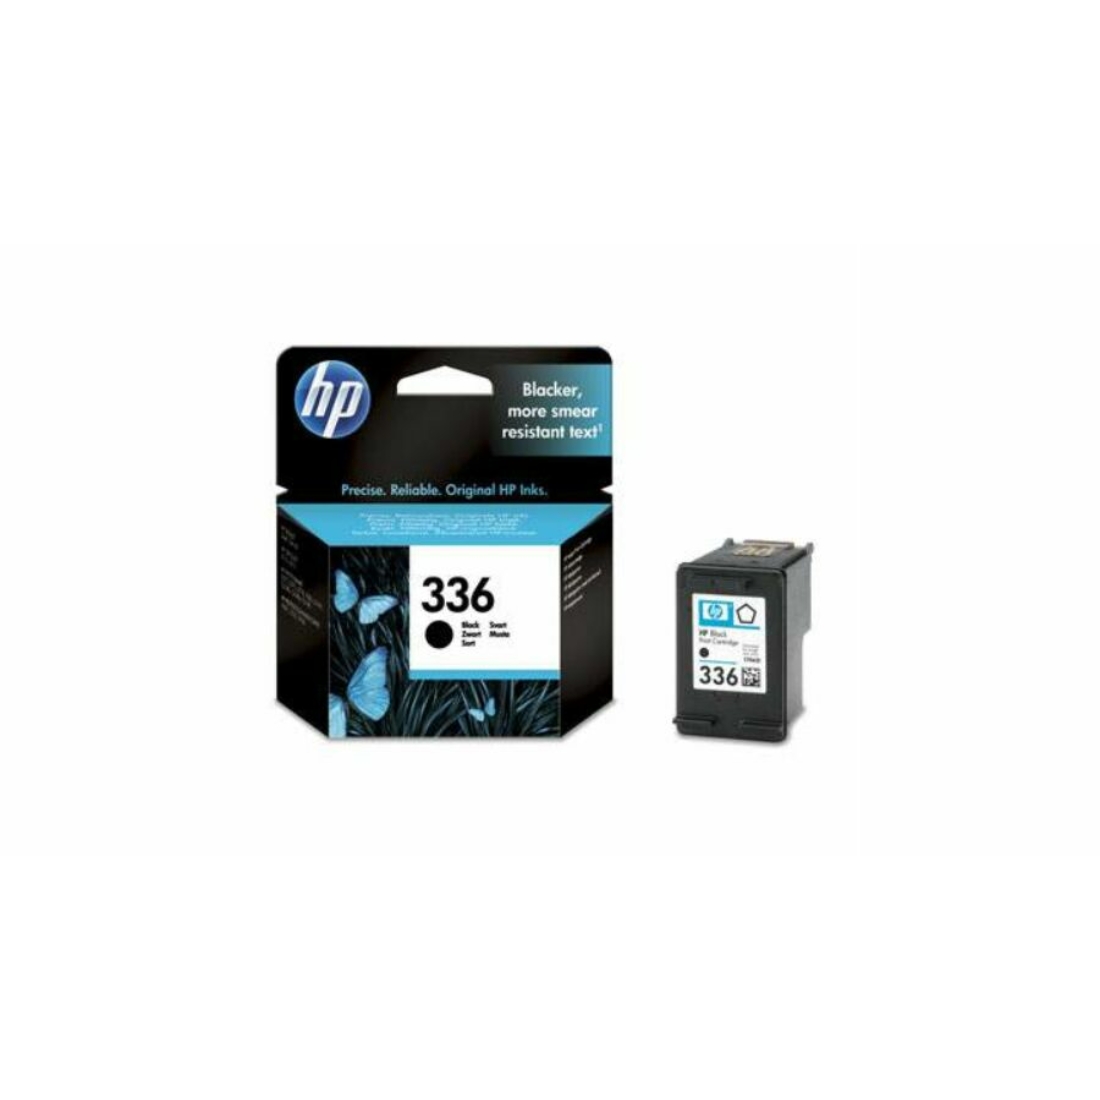 HP C9362EE No.336 fekete eredeti tintapatron